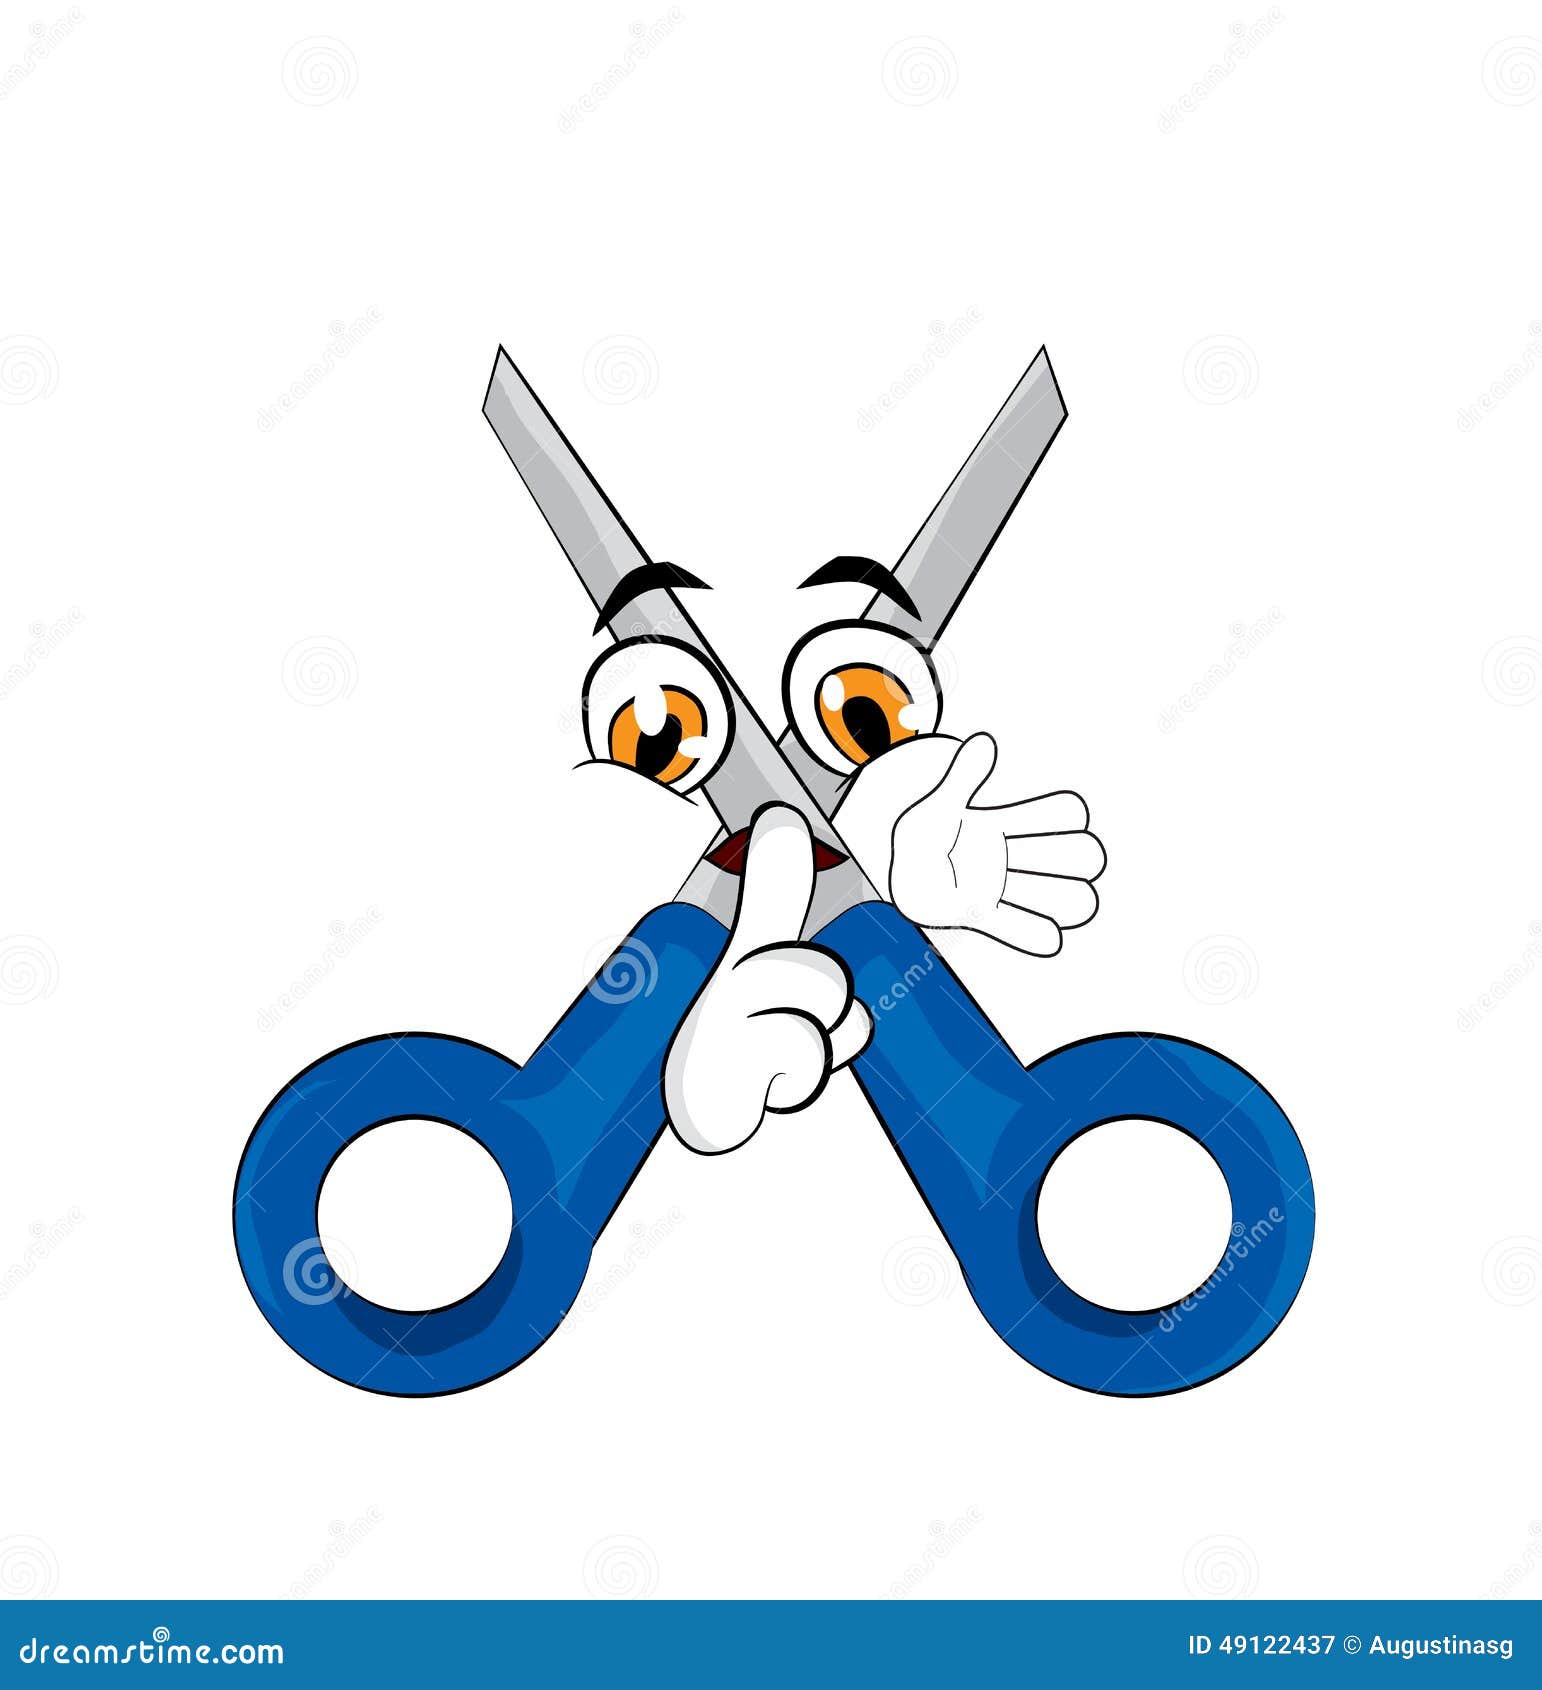 Scissors cartoon stock illustration. Illustration of silence - 49122437